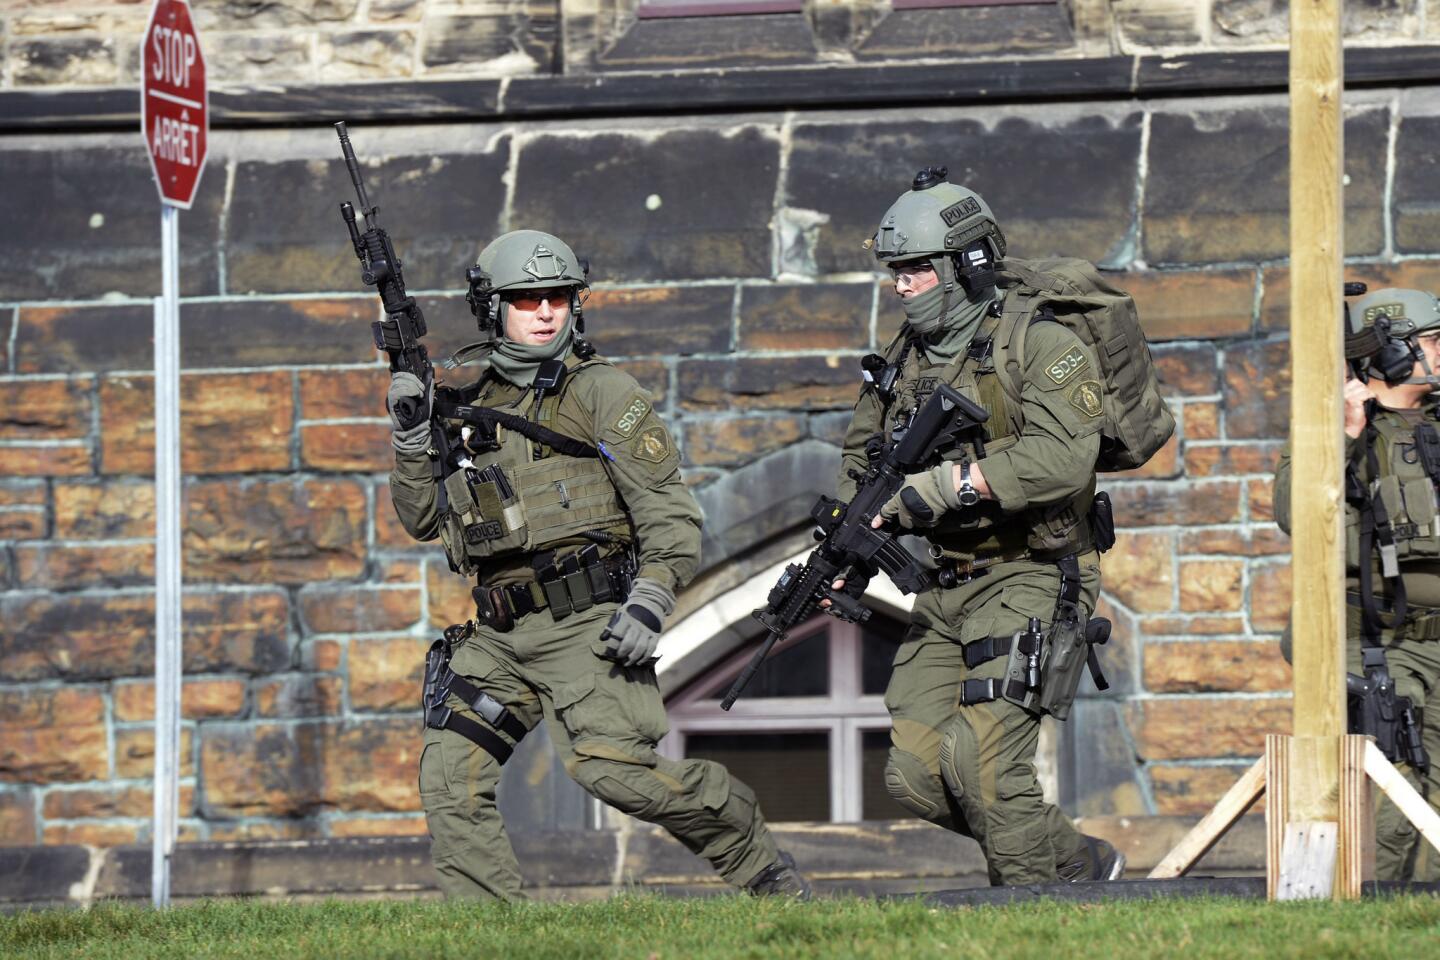 Shooting near Canadian Parliament